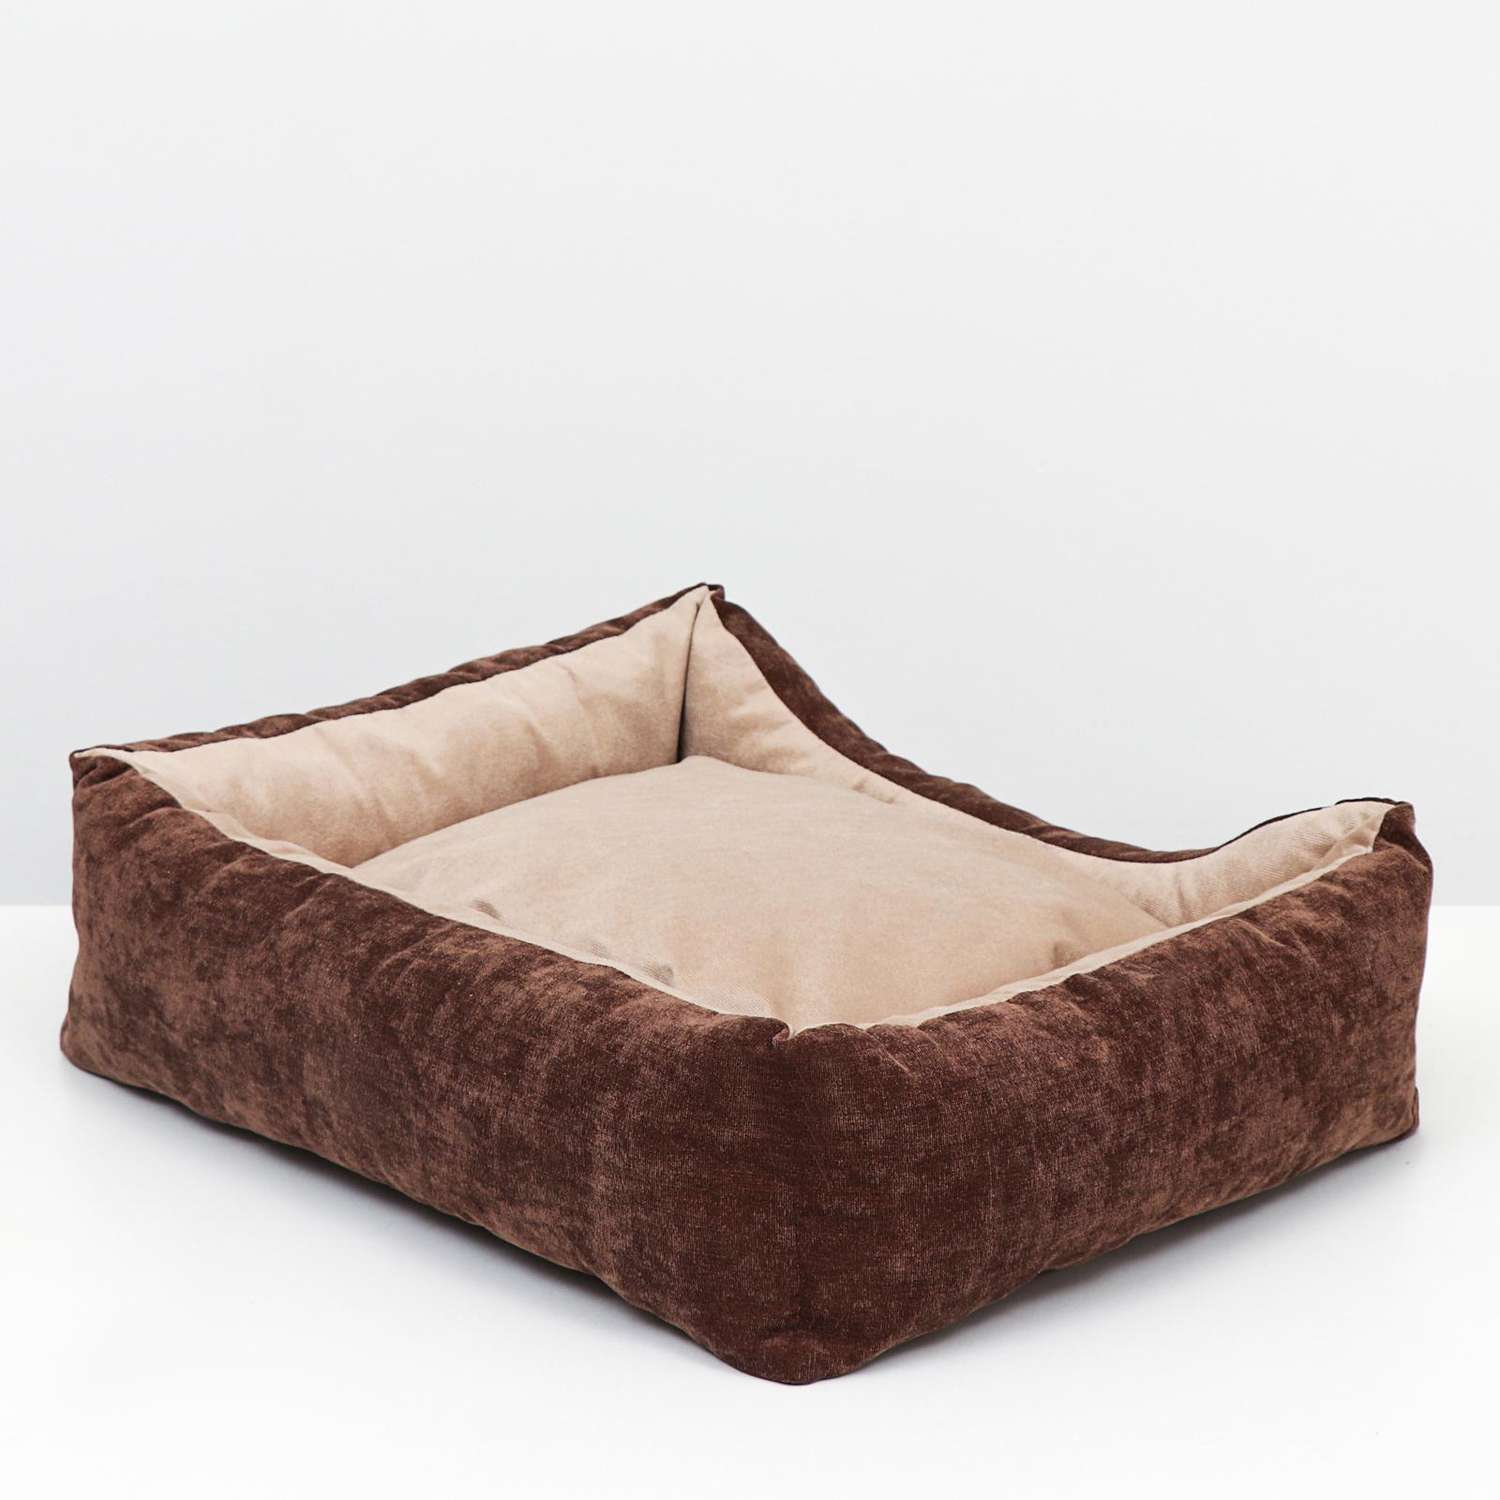 Лежанка Пижон со съемным чехлом мебельная ткань поролон 55х45х15 см - фото 2